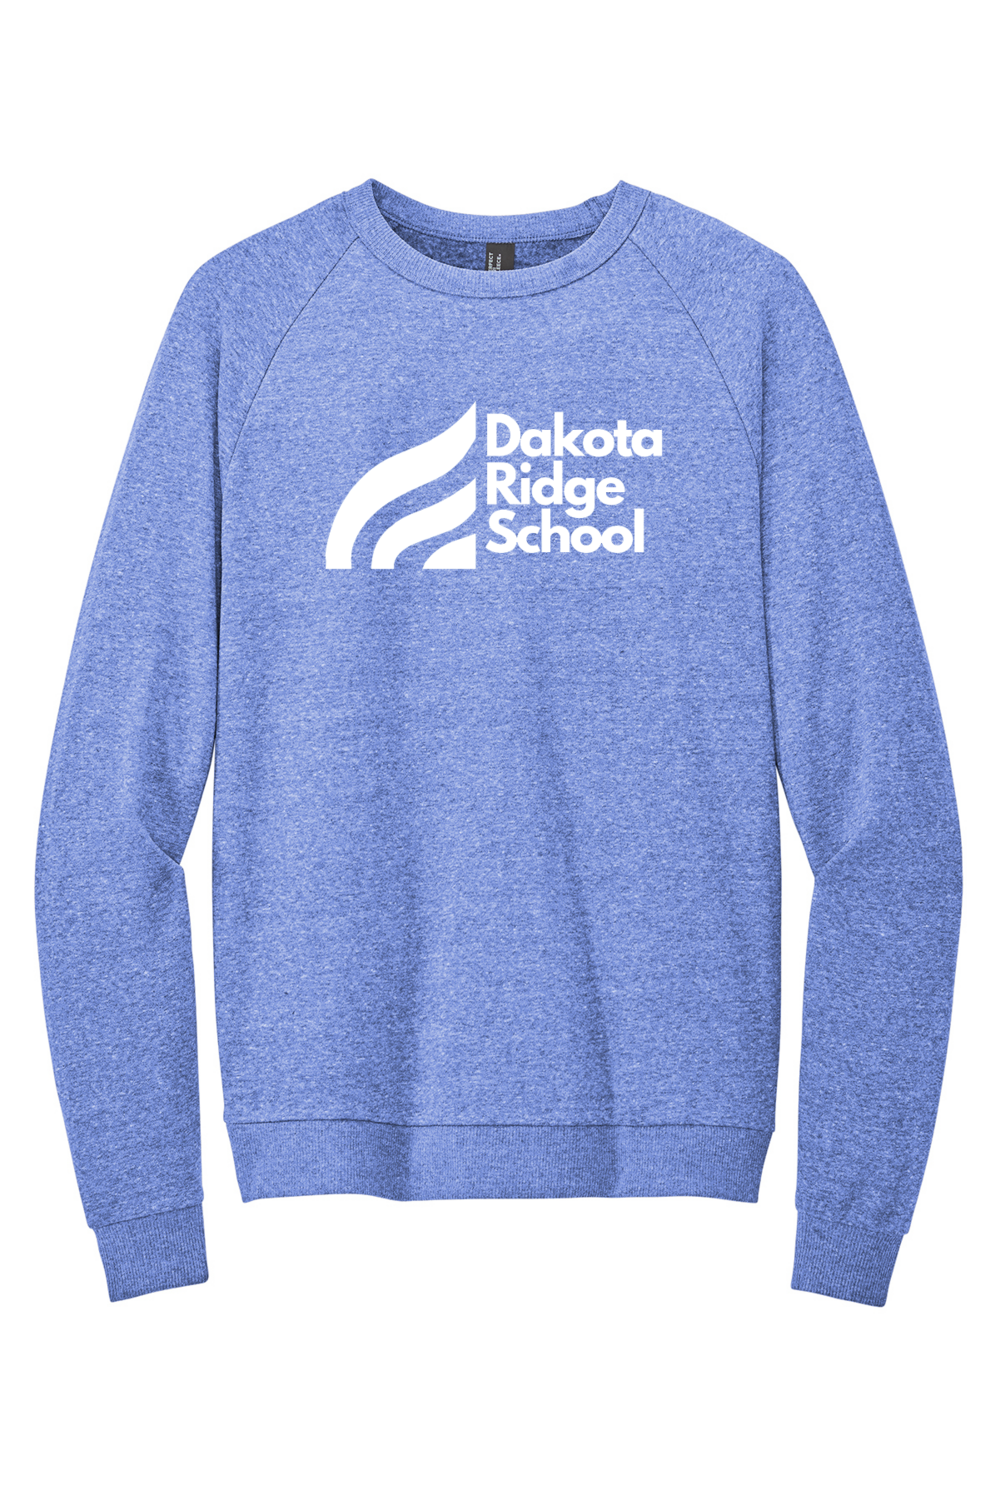 Dakota Ridge Adult Adult Unisex Crewneck Sweatshirt - Design B